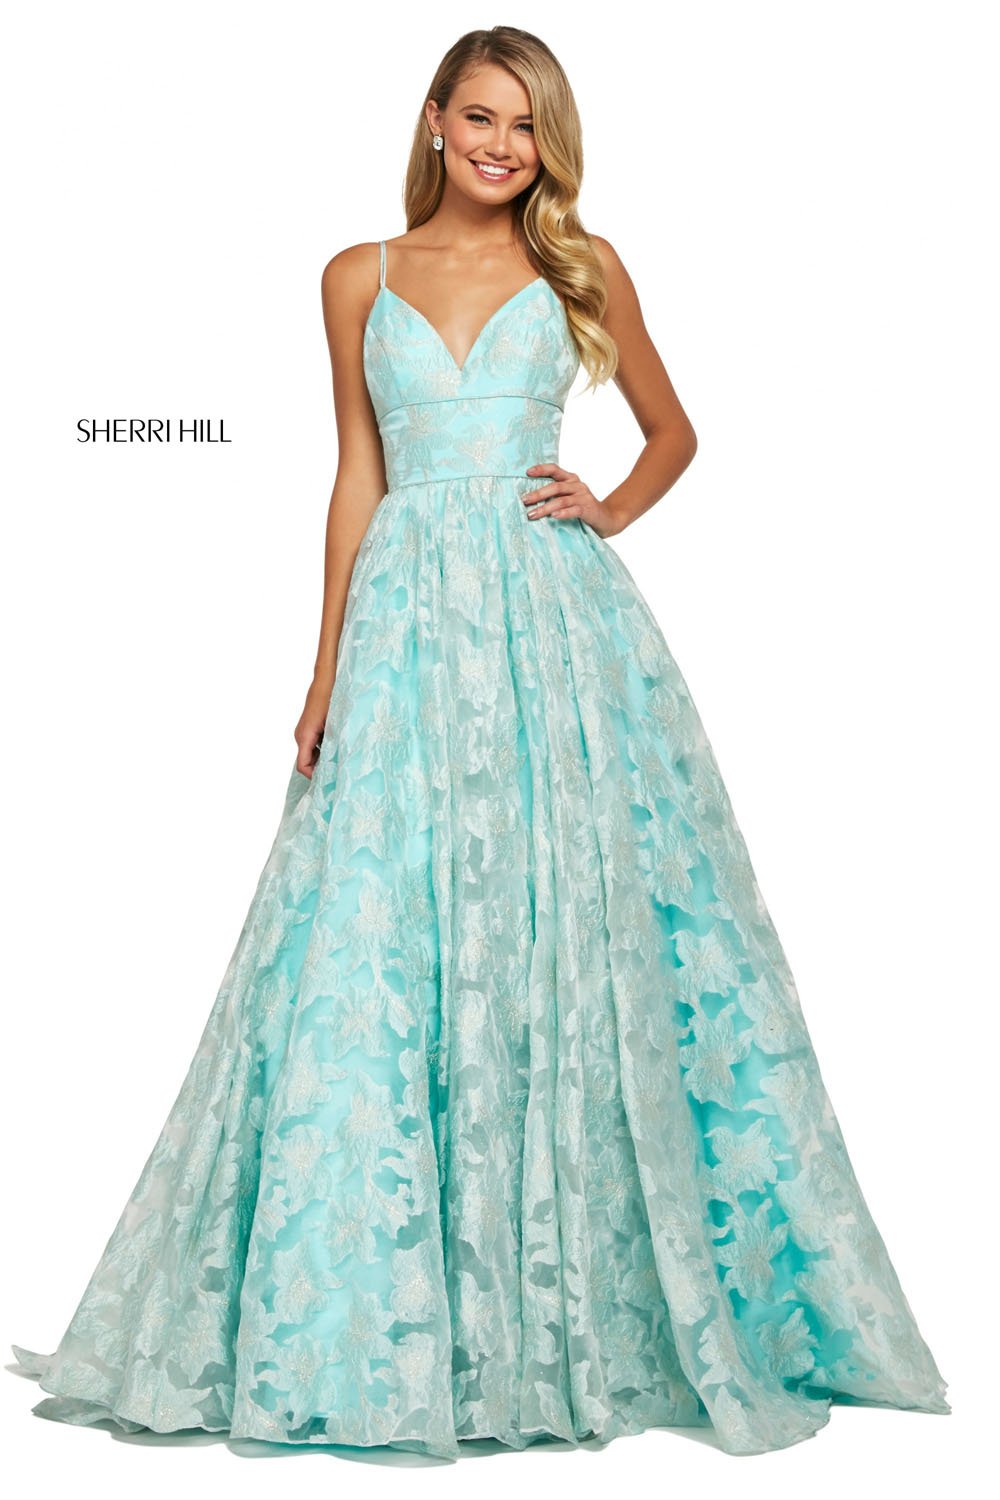 Sherri Hill 53410 dress images in these colors: Aqua, Ivory, Blush.